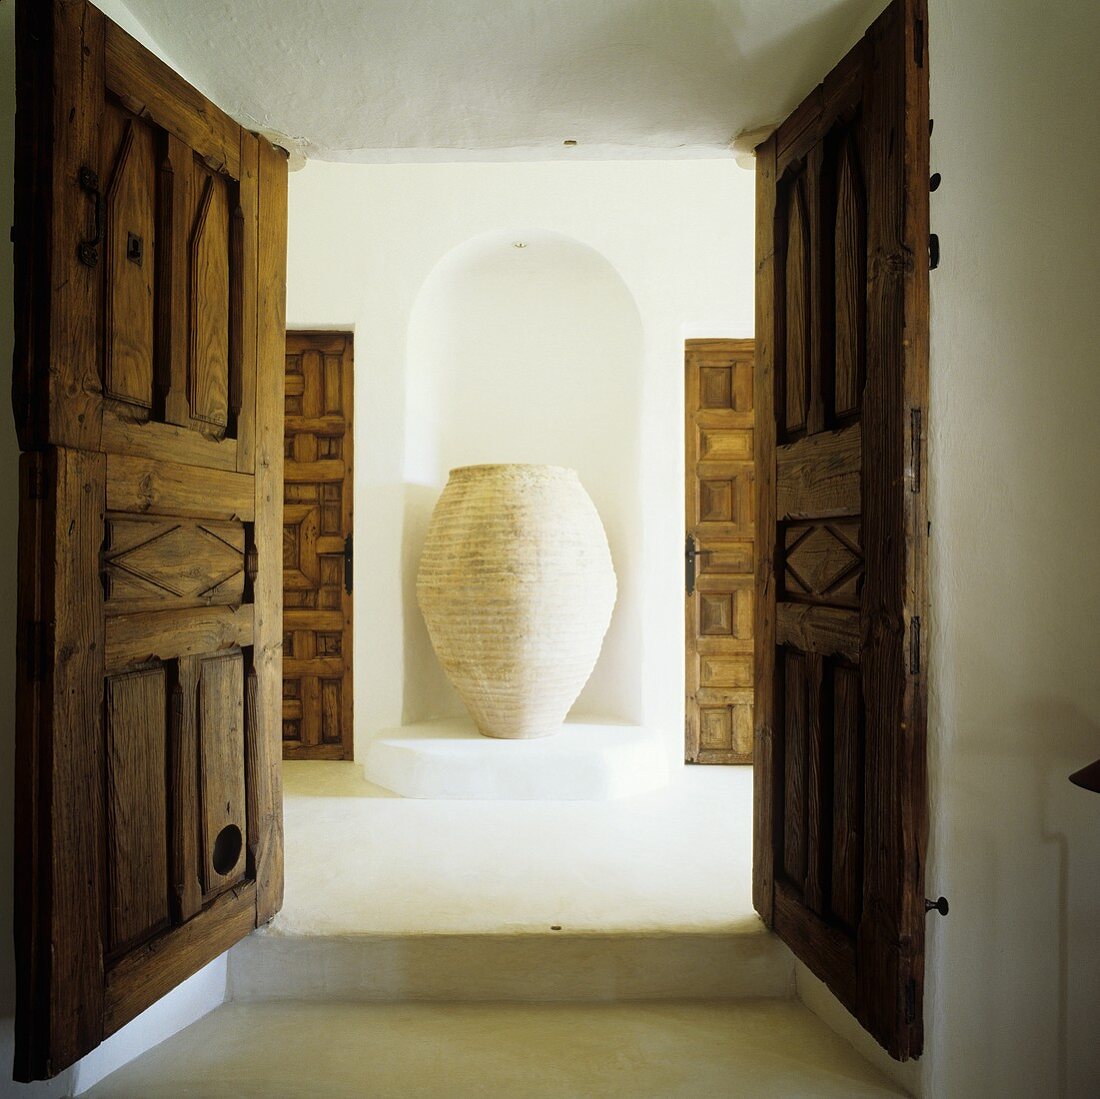 A view through open double door onto a an amphora in a wall niche in a Mediterranean house